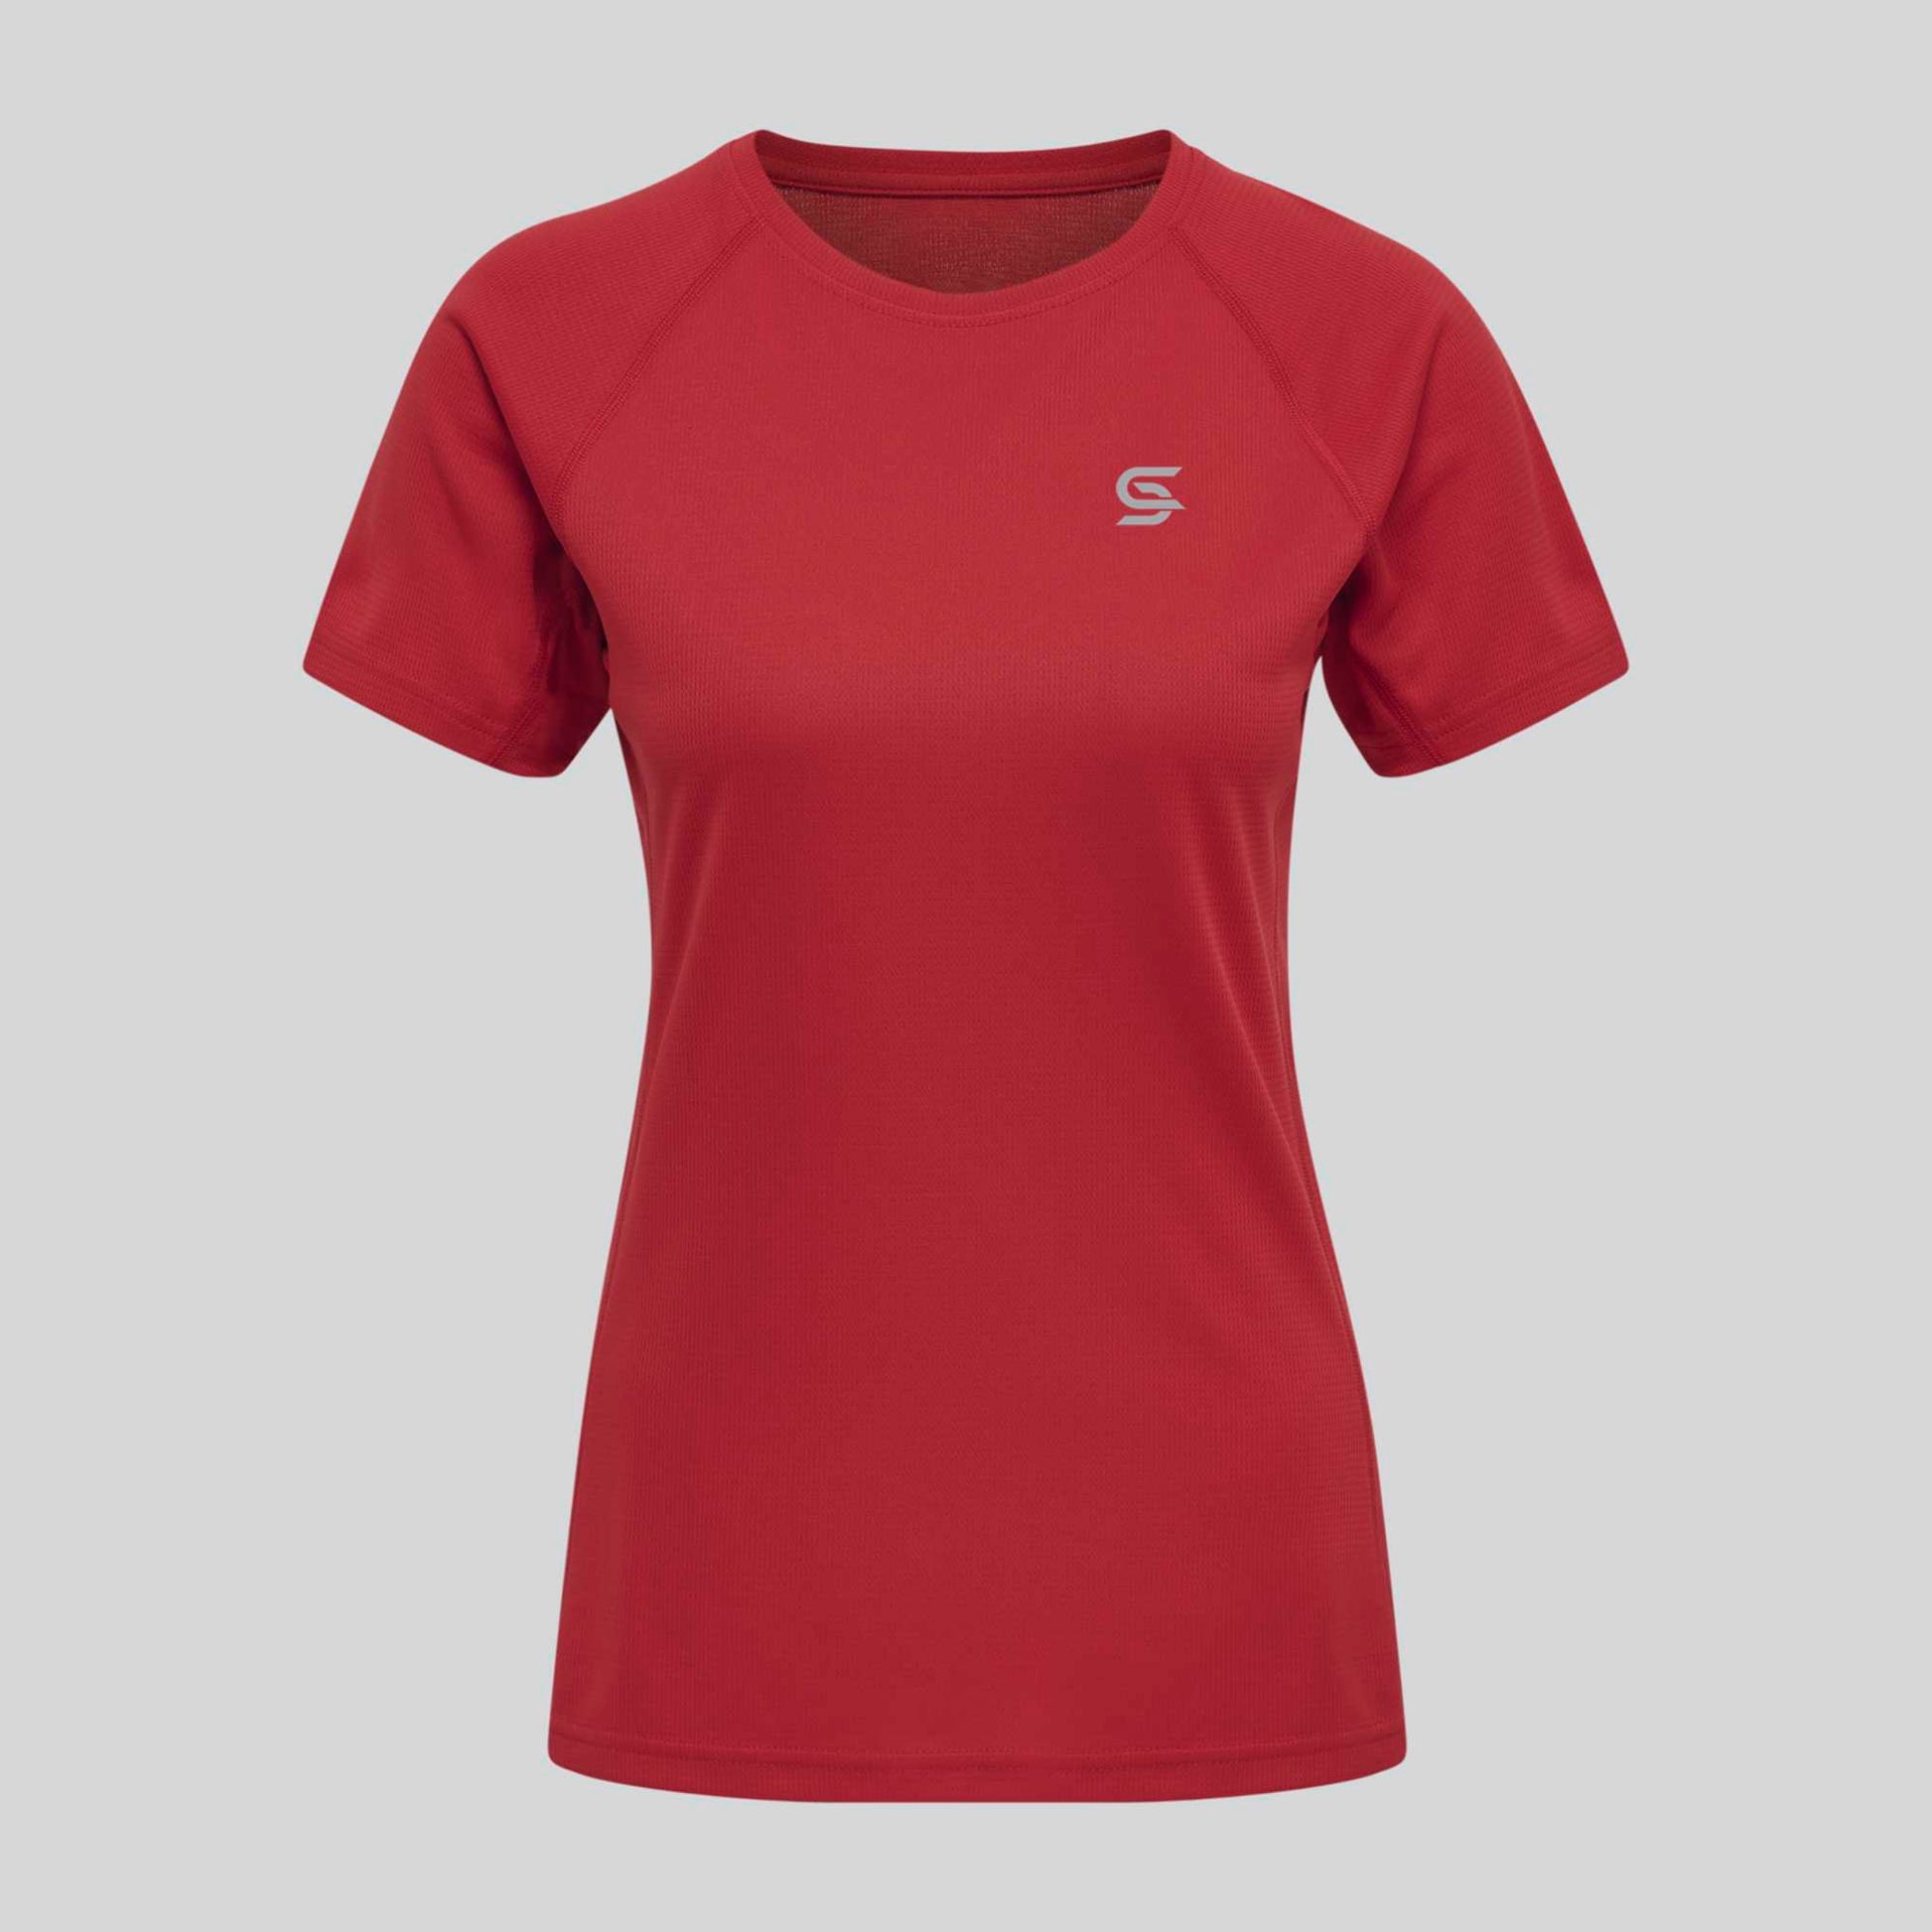 Dynamic Tshirt Red Women's - Sports Cartel